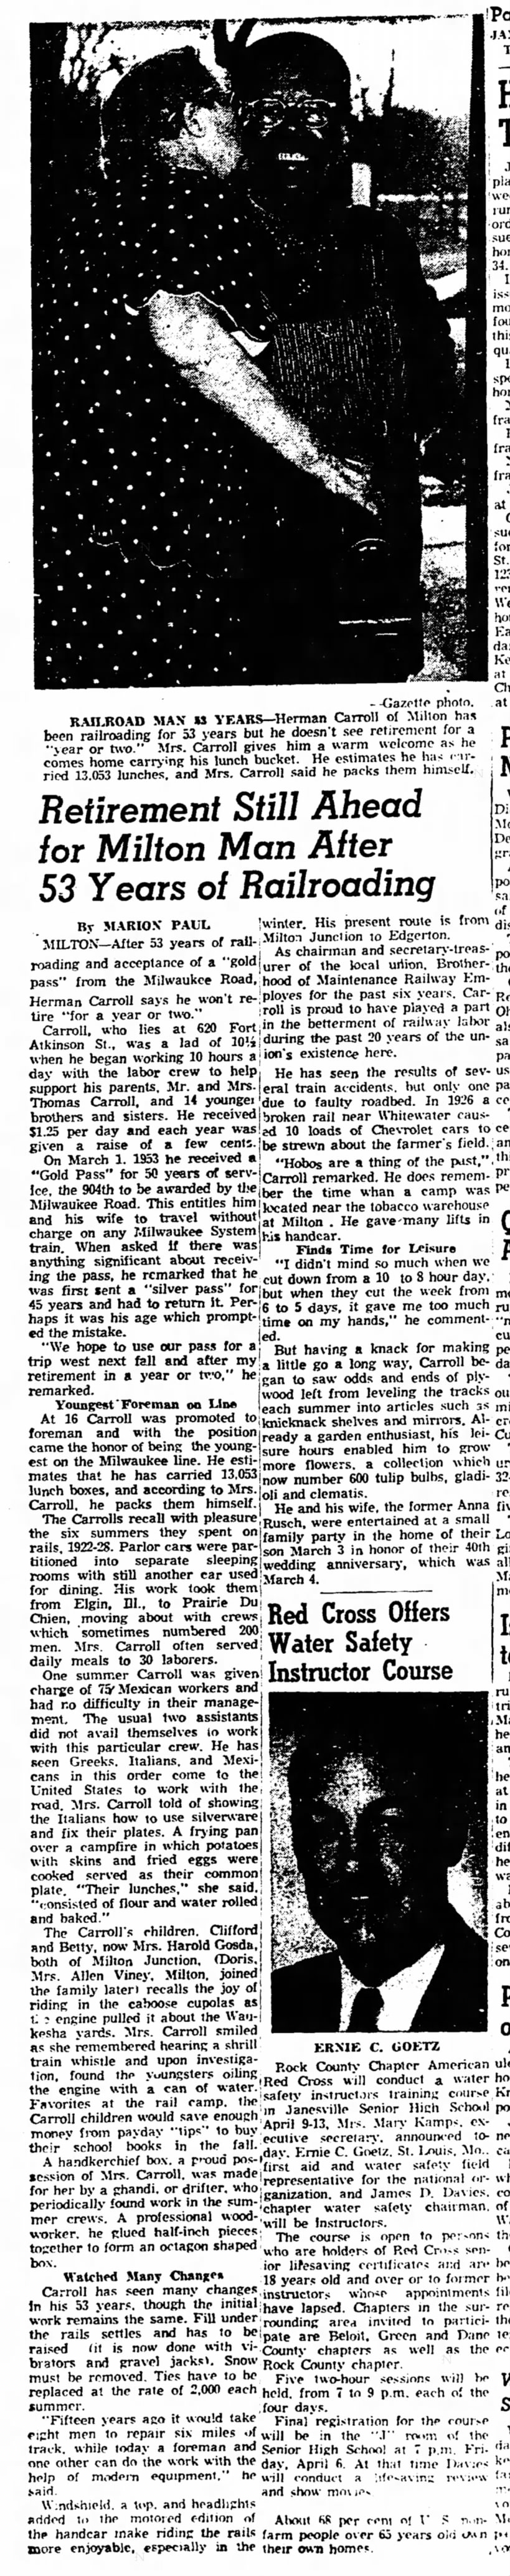 Herman Carroll RR story
16 Mar 1956